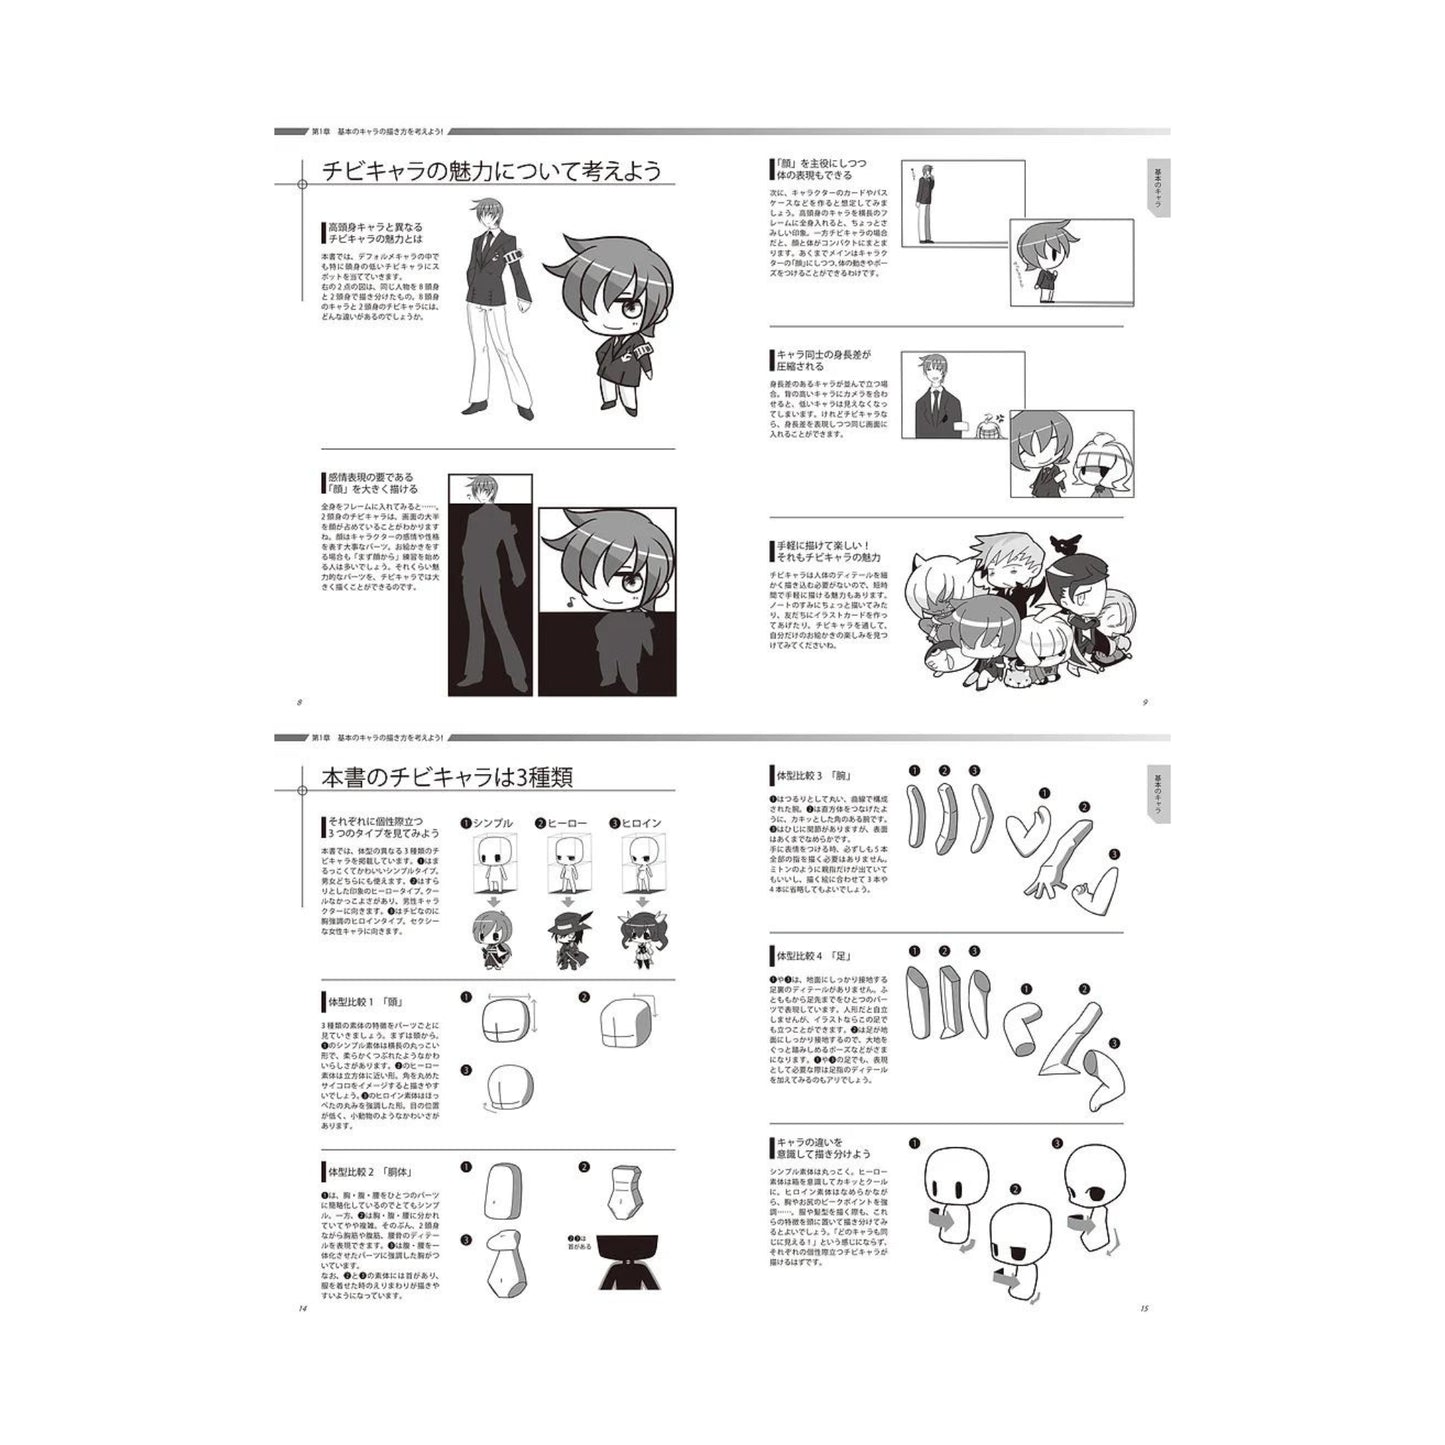 How to draw - jap. Zeichenbuch - Chibi-Charas + CD-ROM